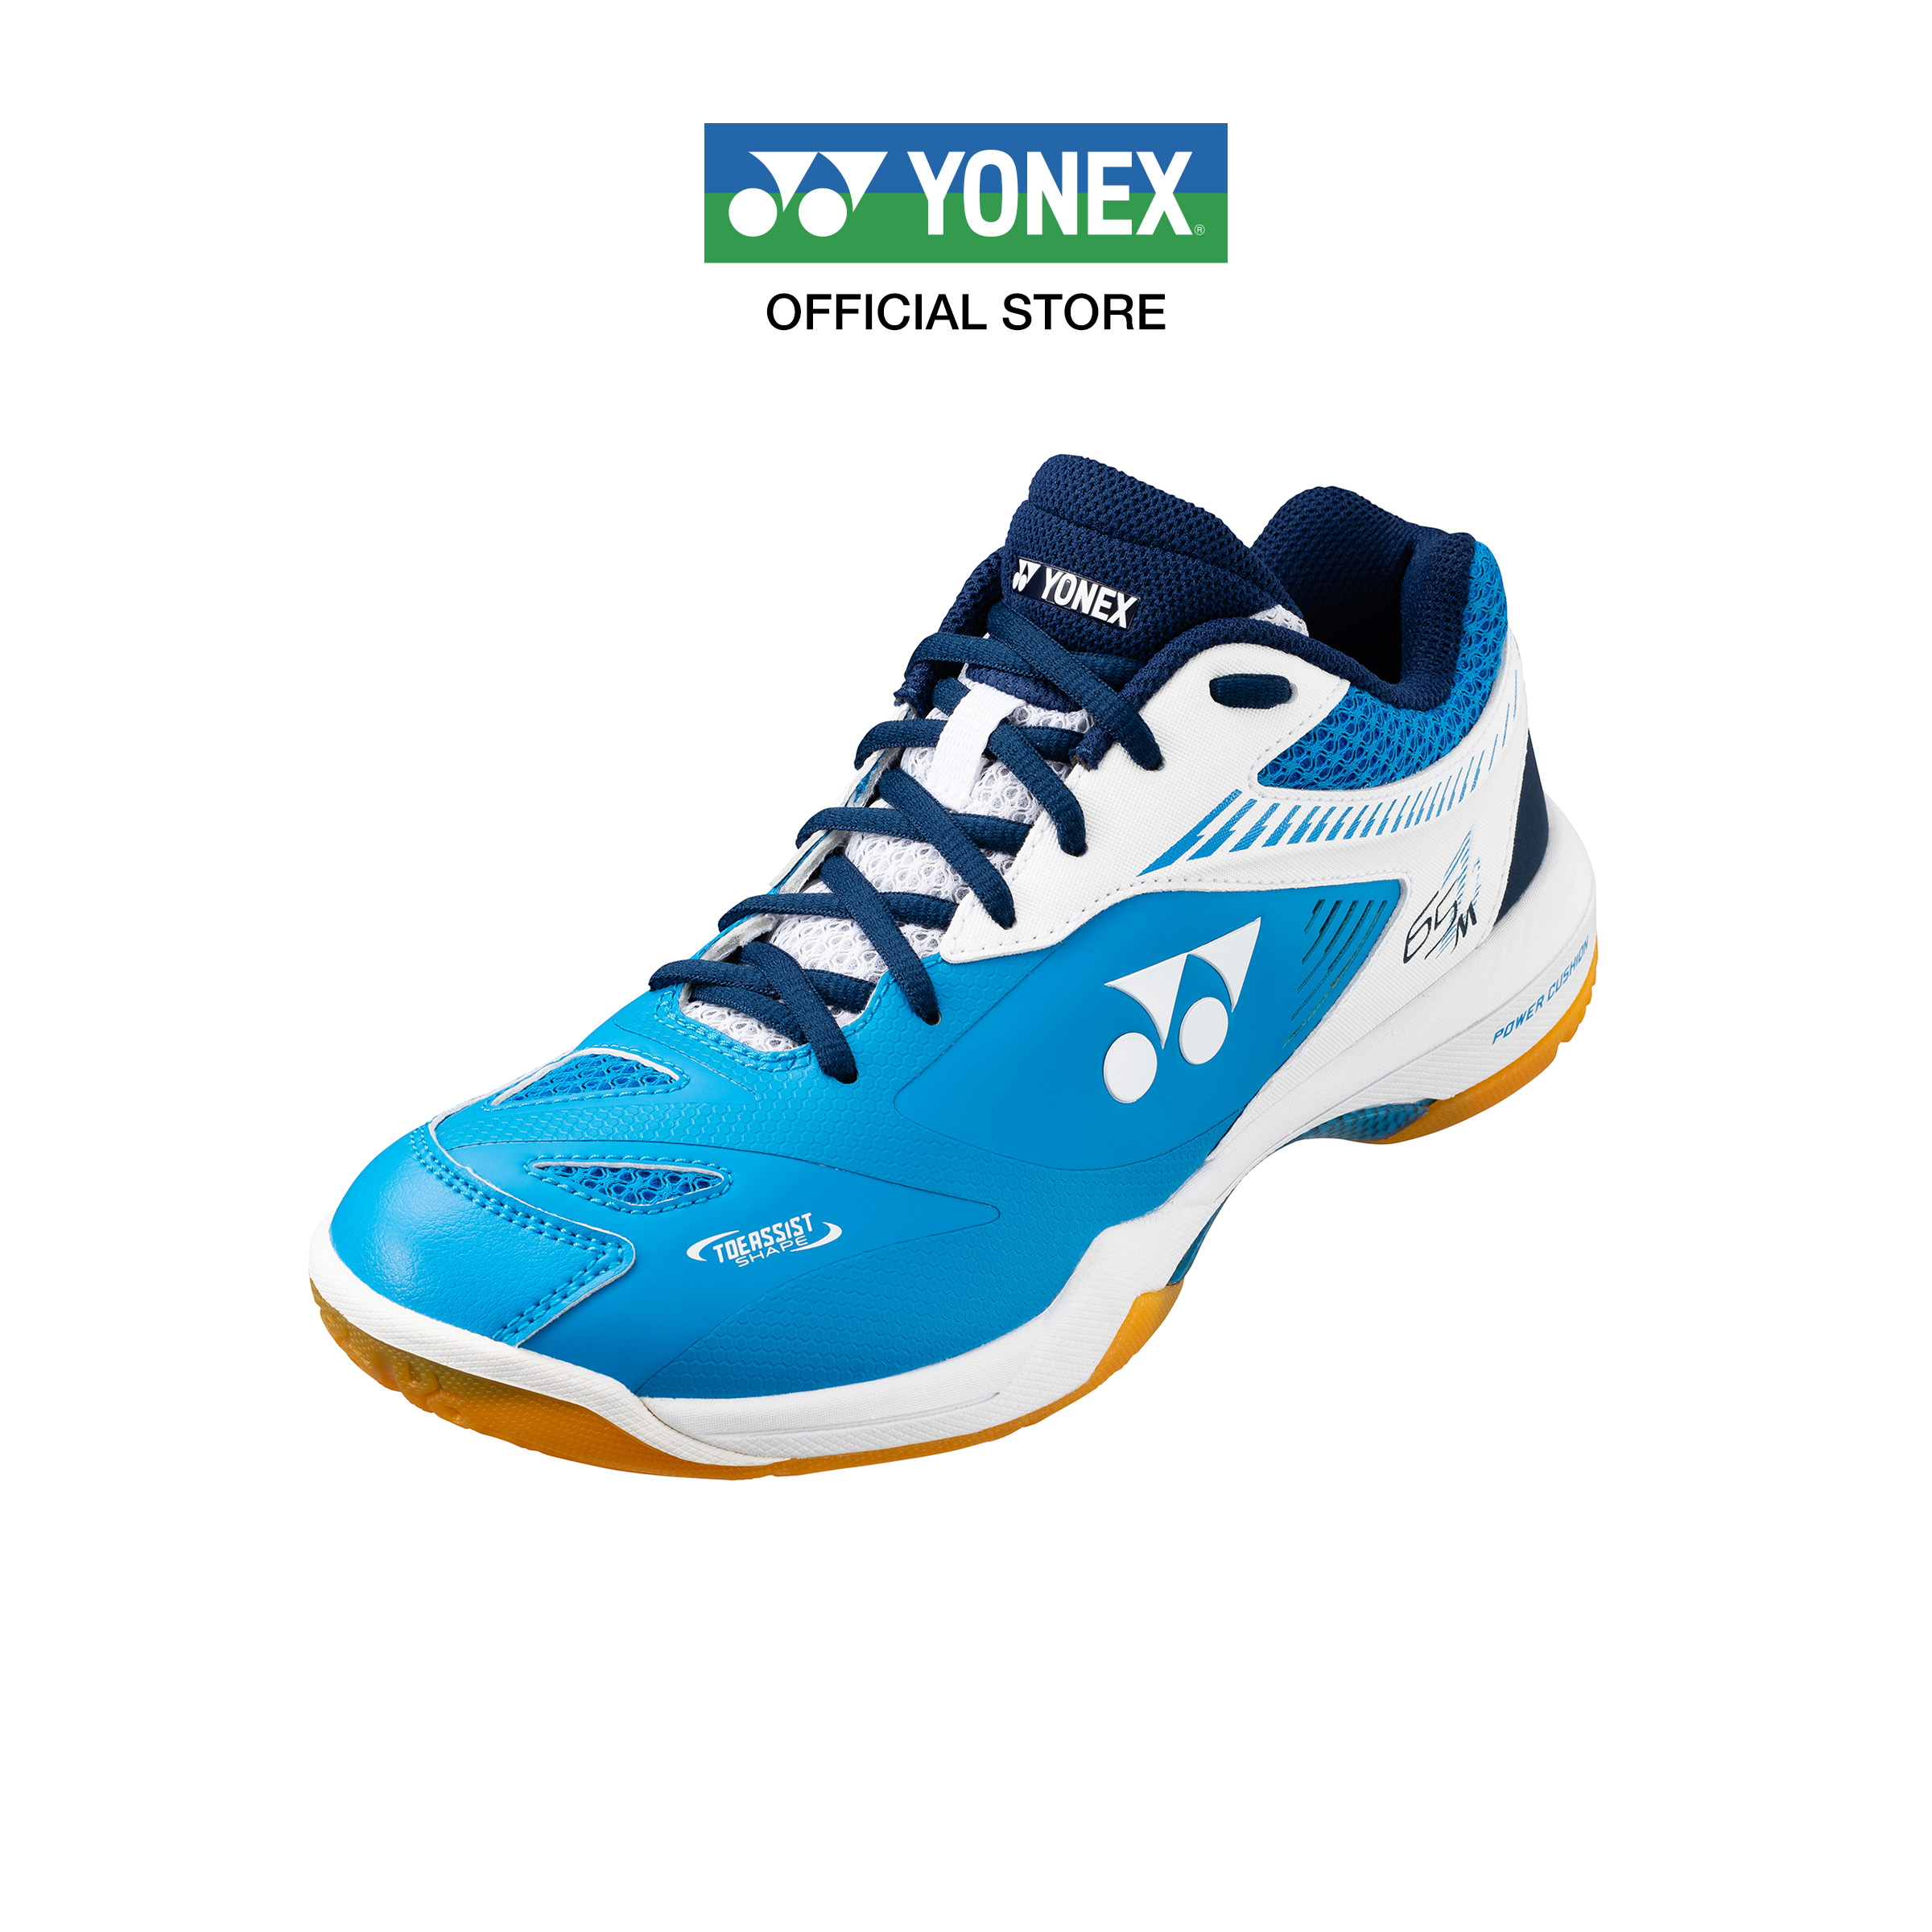 (SIZE US MEN) YONEX รุ่น POWER CUSHION 65 Z 2 MEN (SHB65Z2M) รองเท้าแบดมินตันให้ความกระชับเท้าและความมั่นคงเพื่อตอบสนองการเคลื่อนไหวที่รวดเร็ว